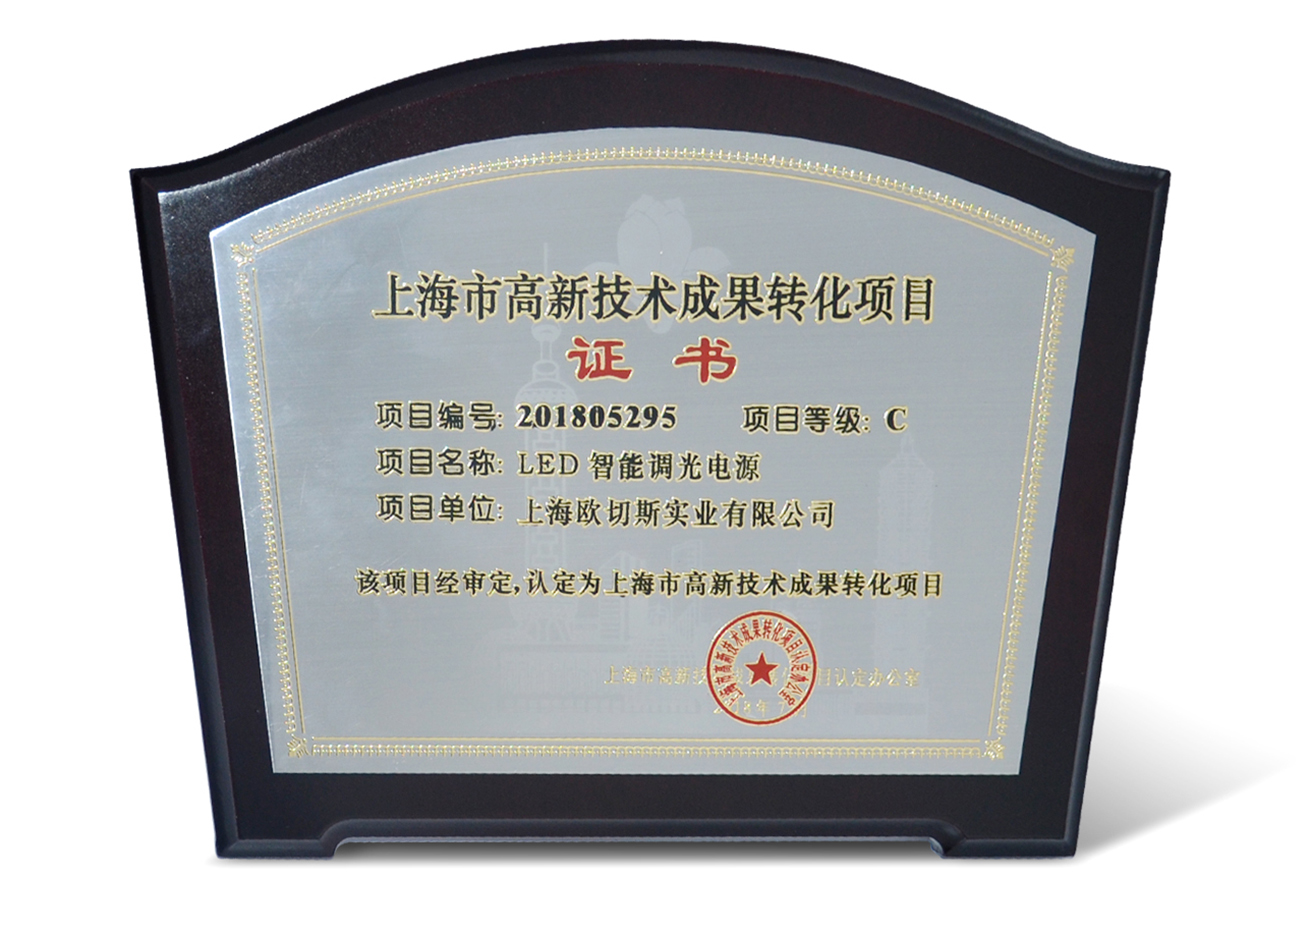 4. High-tech Achievements of Shanghai Municipality Transformation project